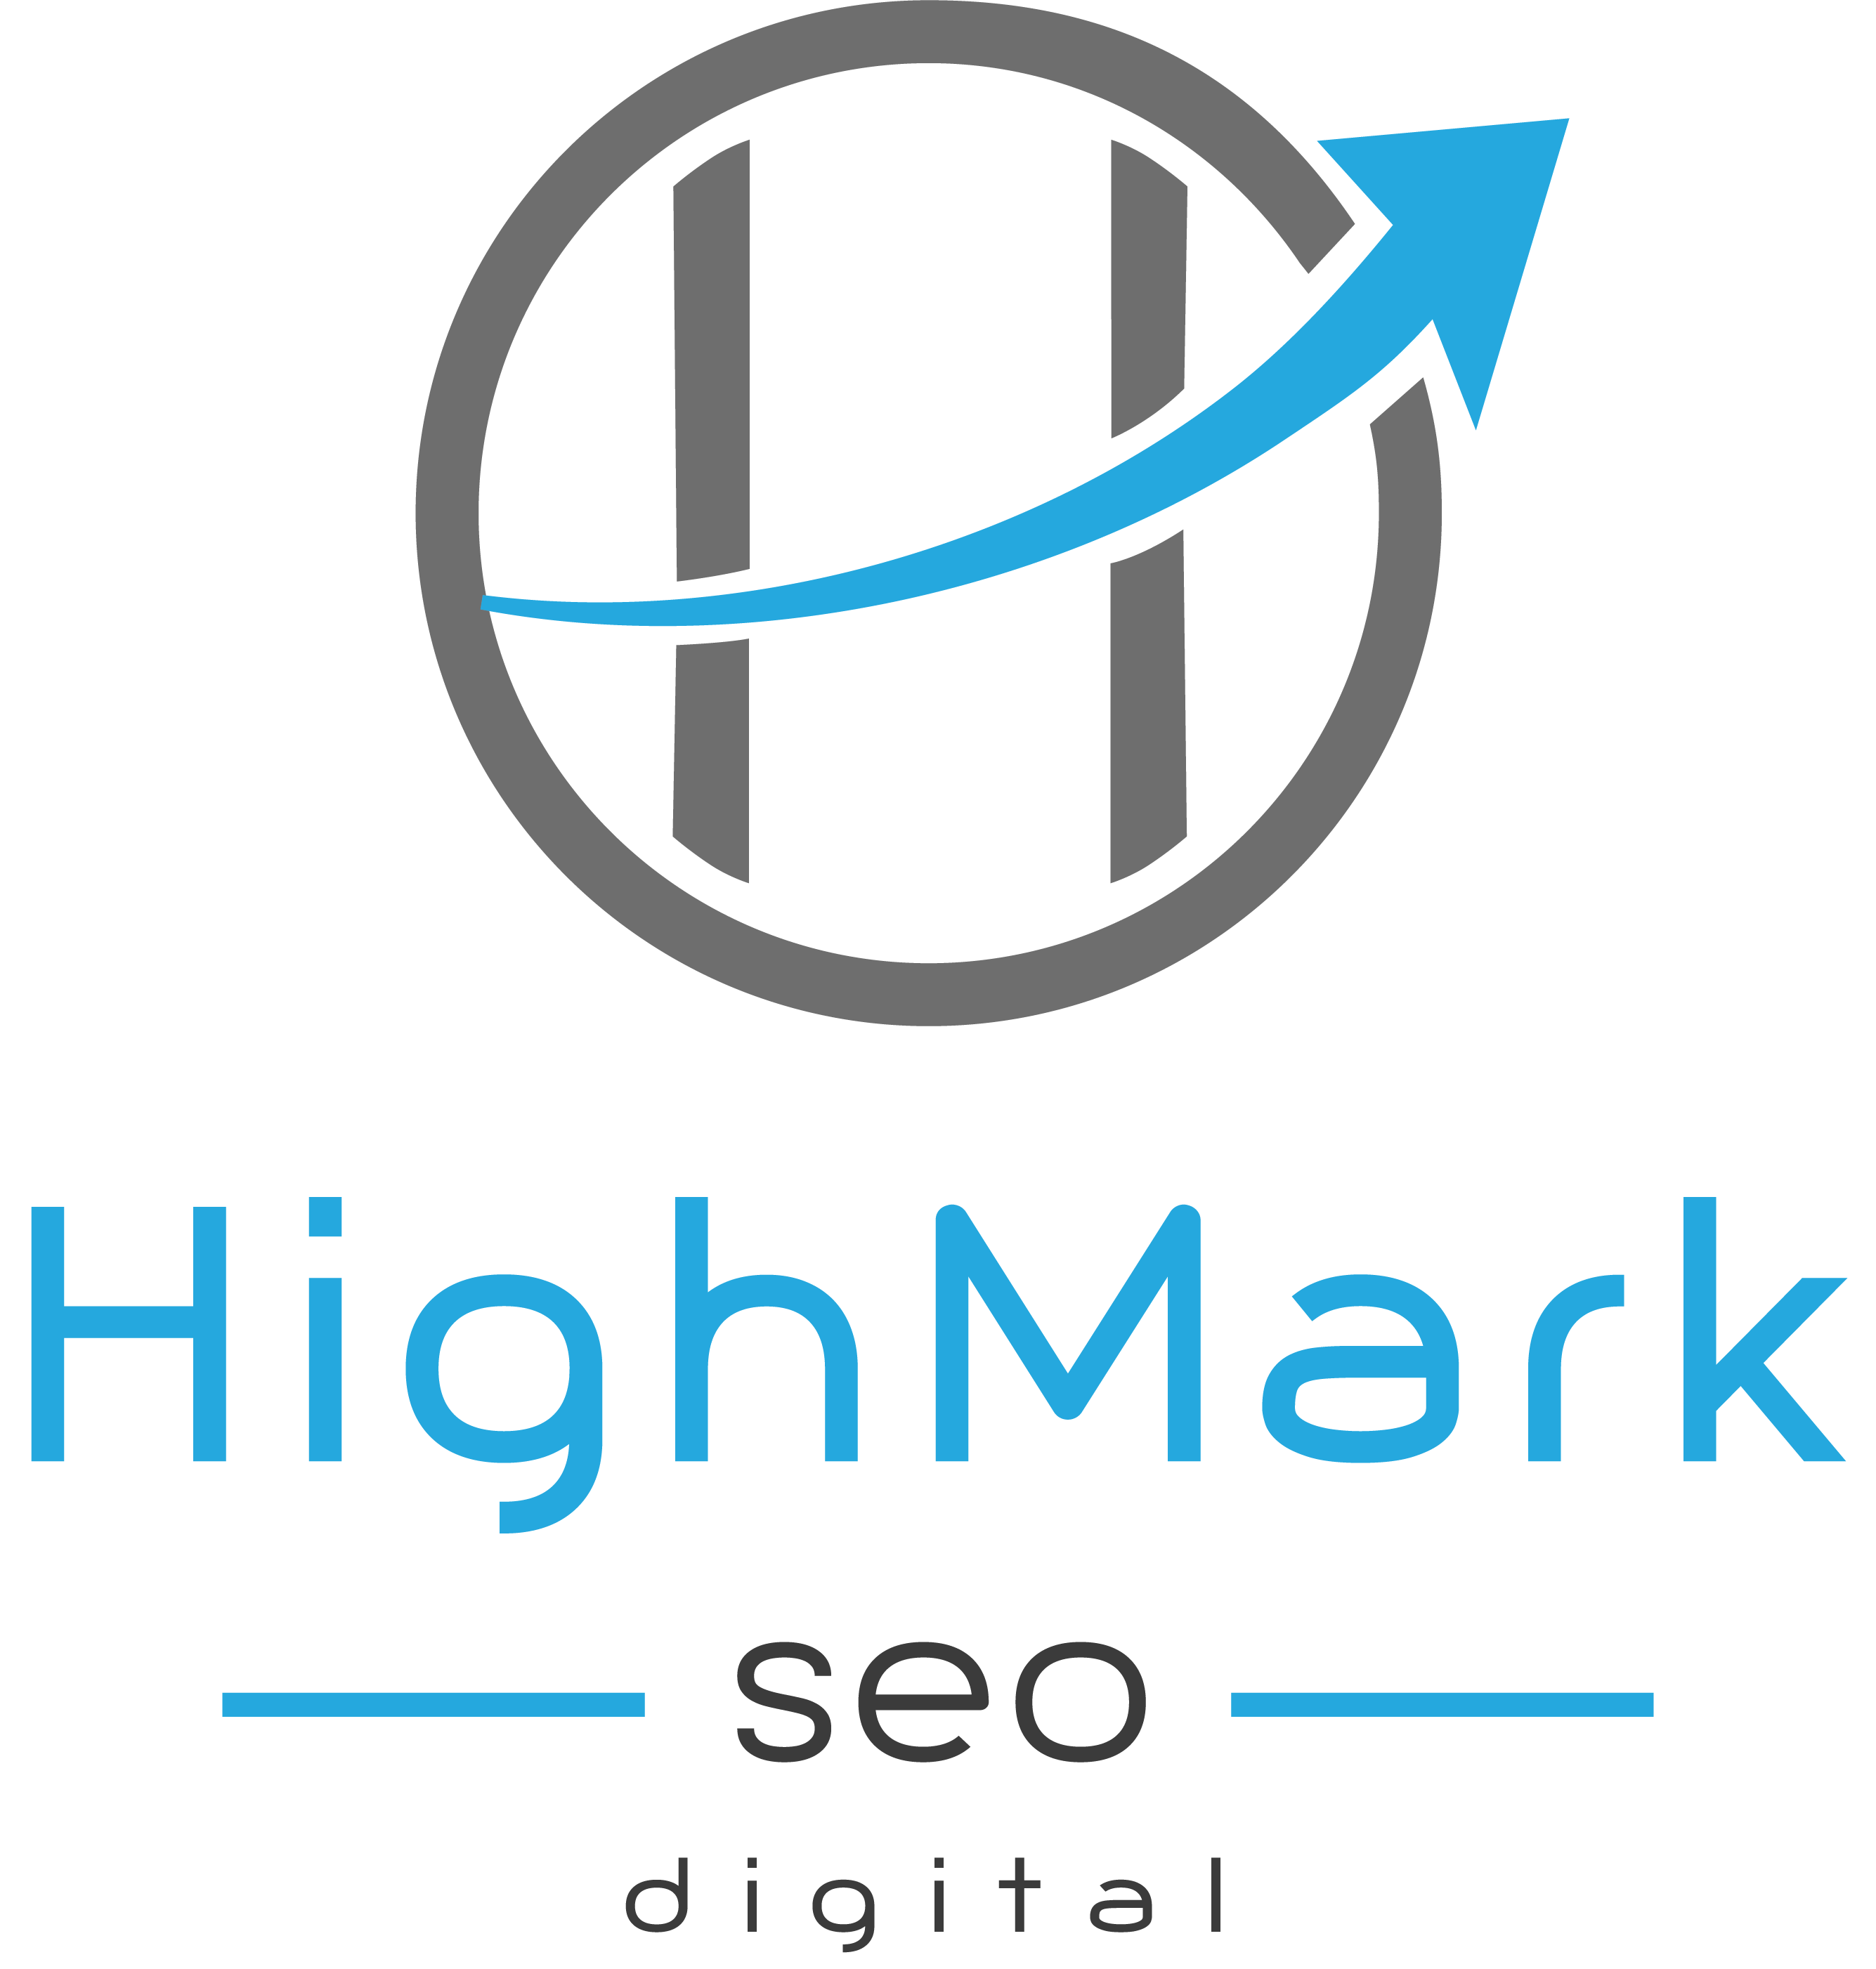 HighMark SEO Digital